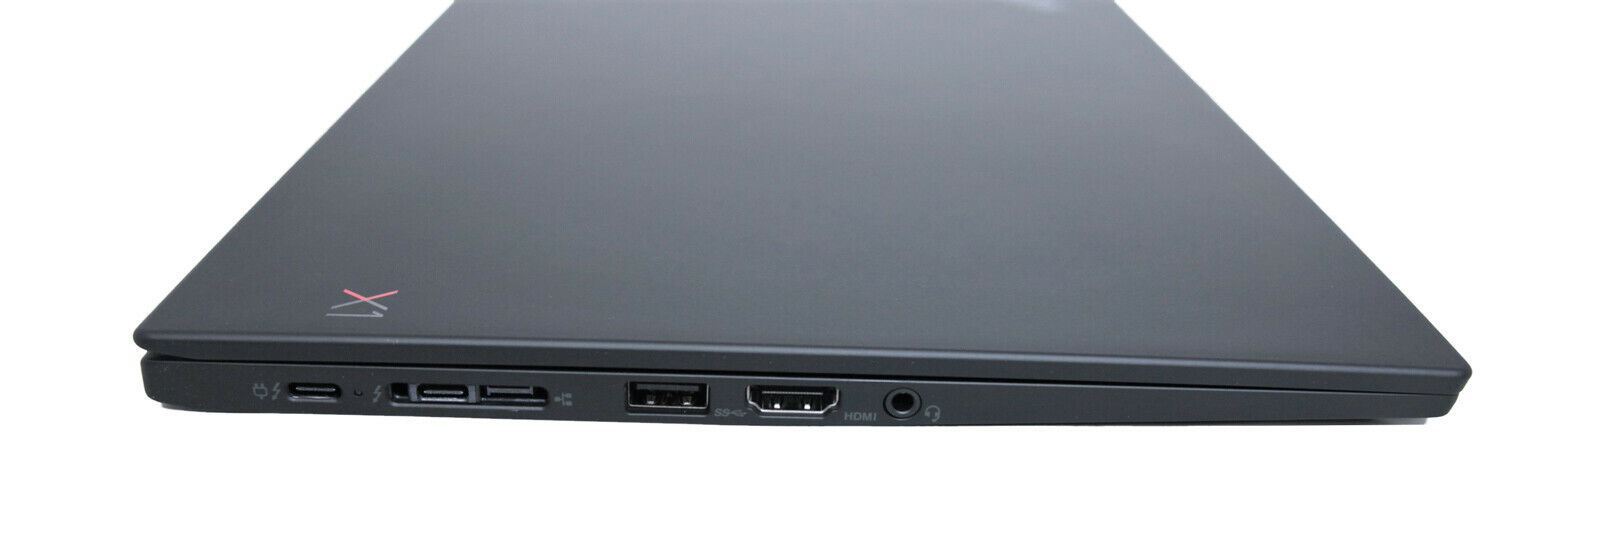 Lenovo Thinkpad X1 Carbon 7th Gen (2019): 8th Gen i5, 16GB RAM, 512GB, VAT - CruiseTech